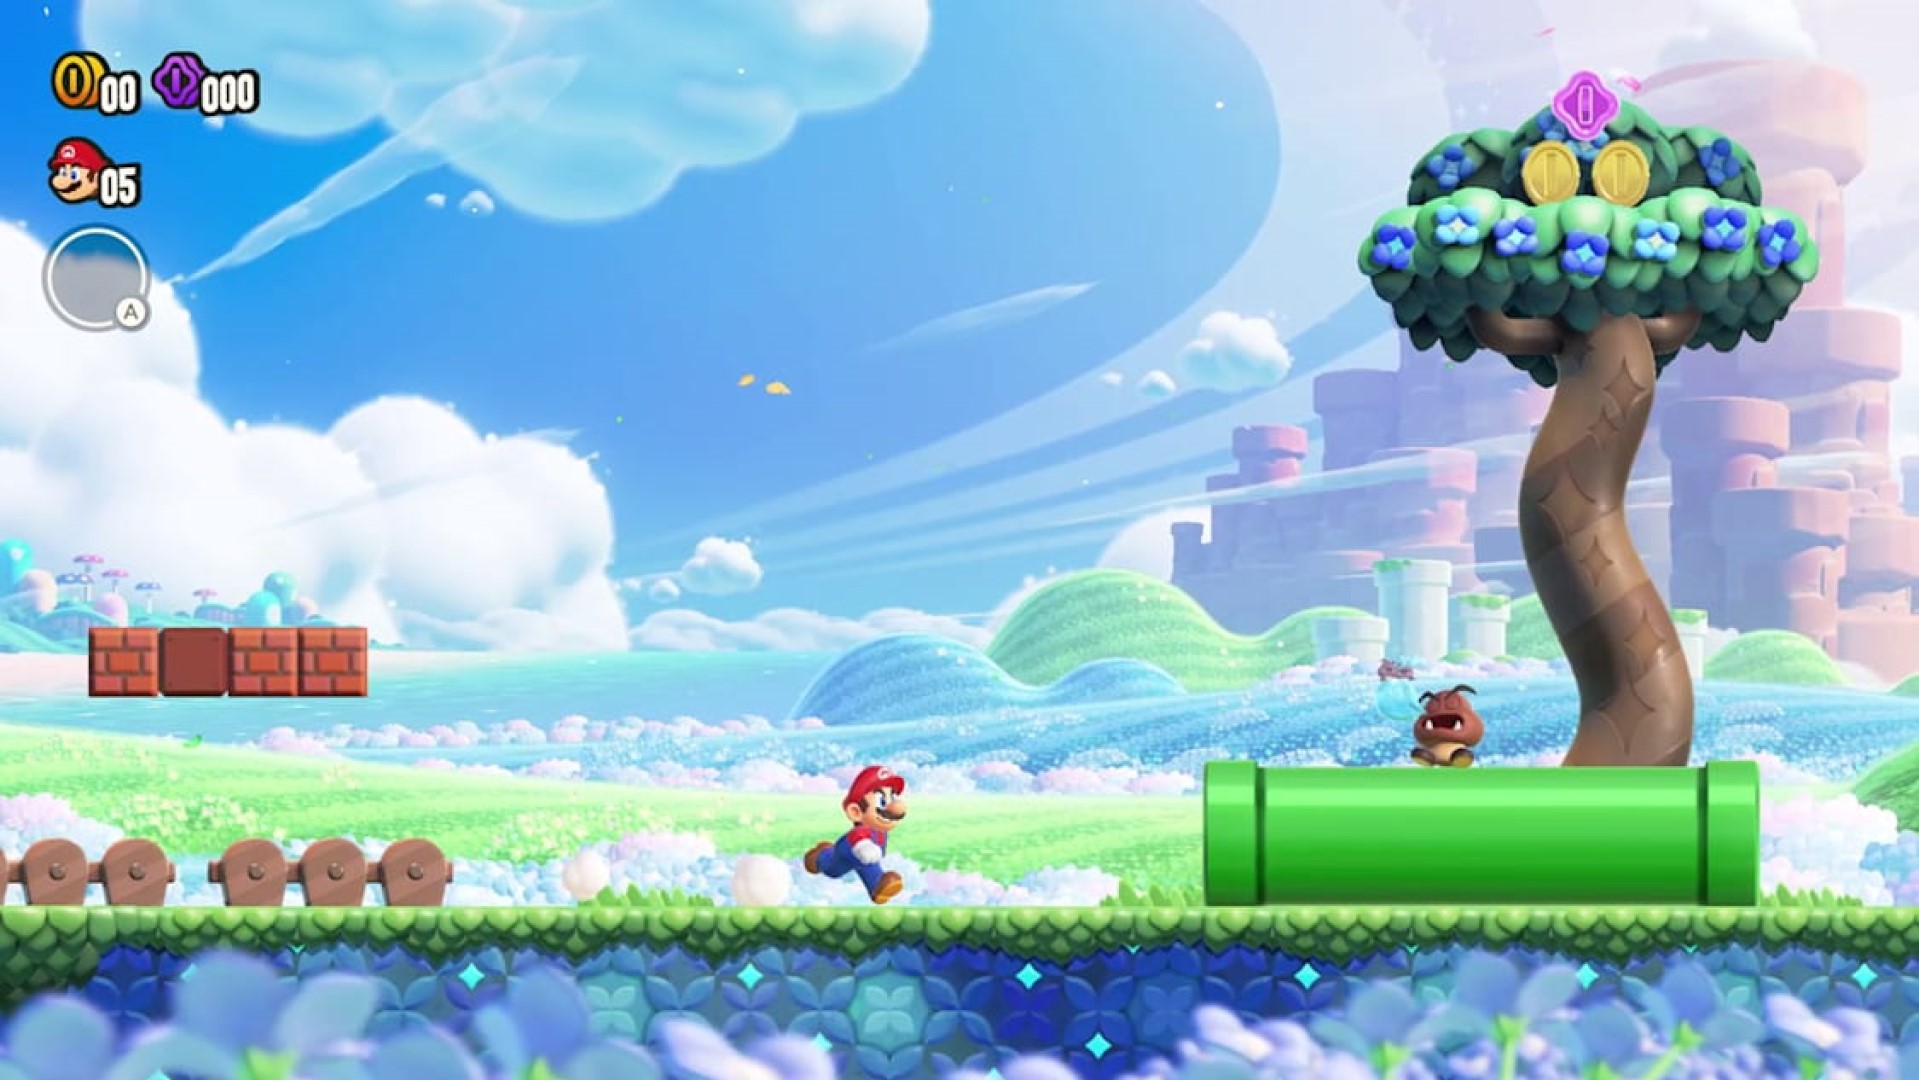 Super Mario Bros. Wonder بار دیگر در صدر جدول فروش ژاپن قرار گرفت